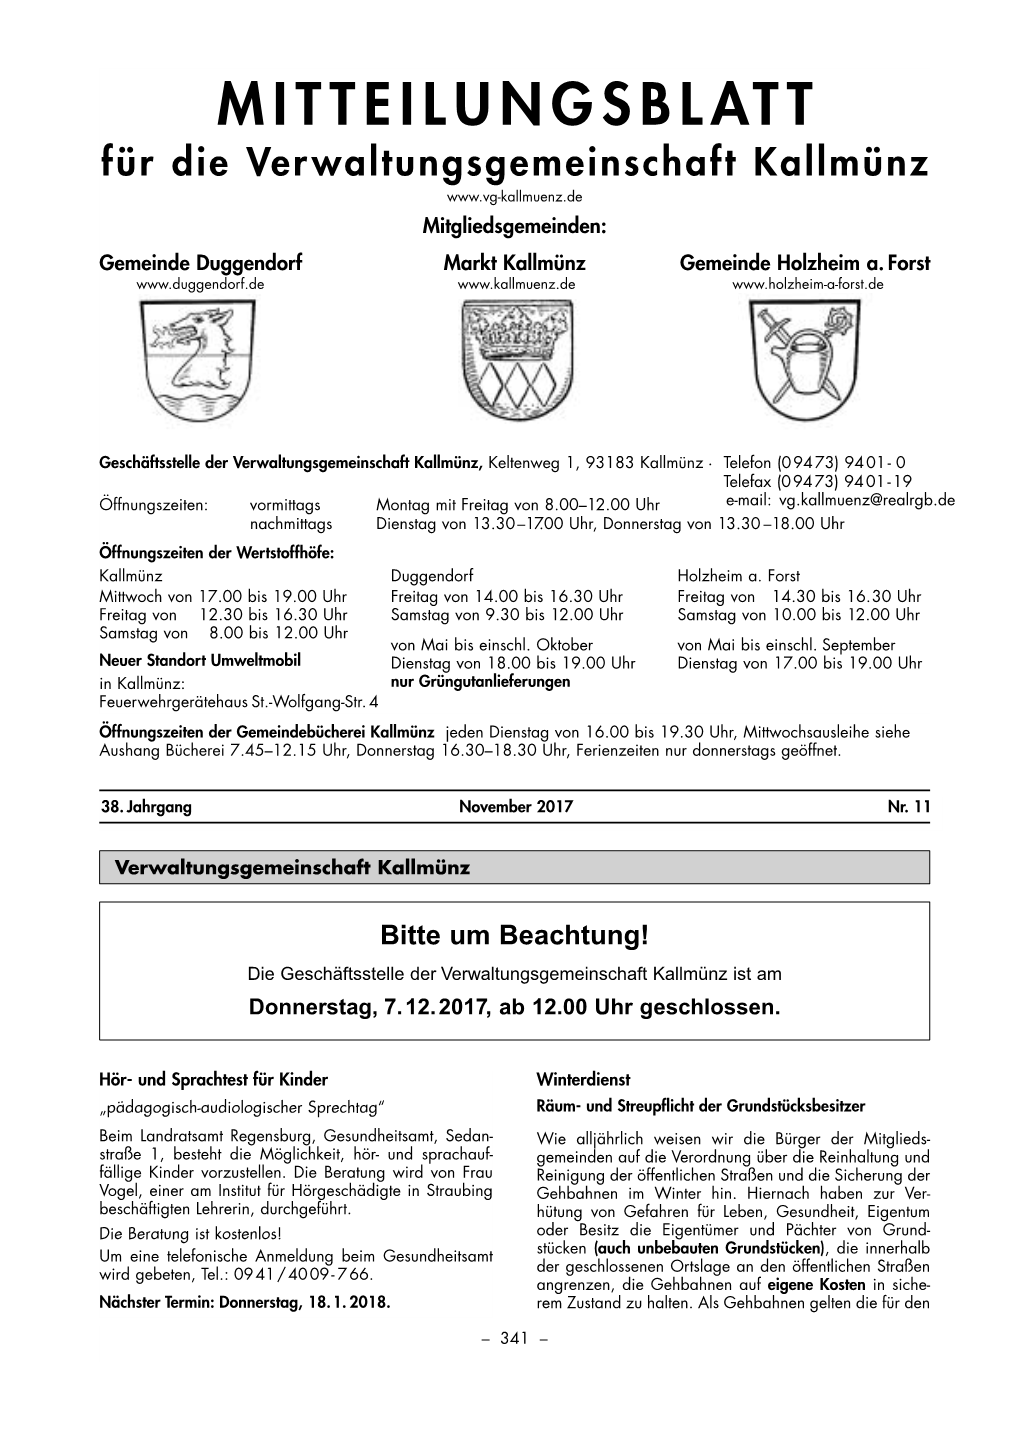 171106 Mitteilungsblatt November.Pdf